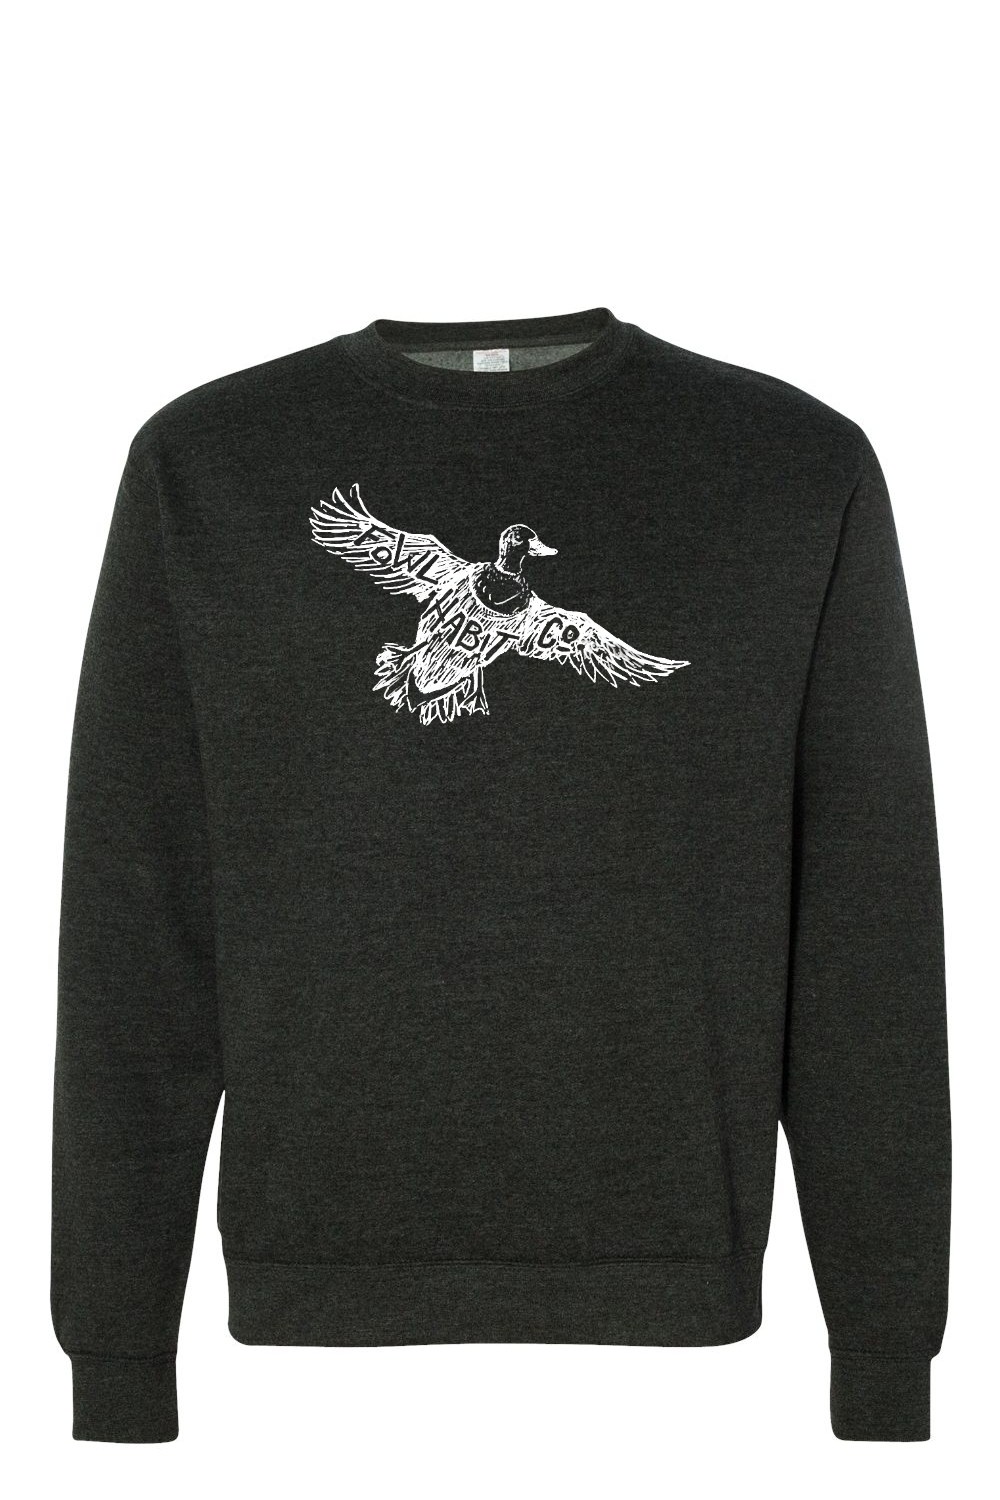 Mallard Drake Sweatshirt - Fowl Habit Co.